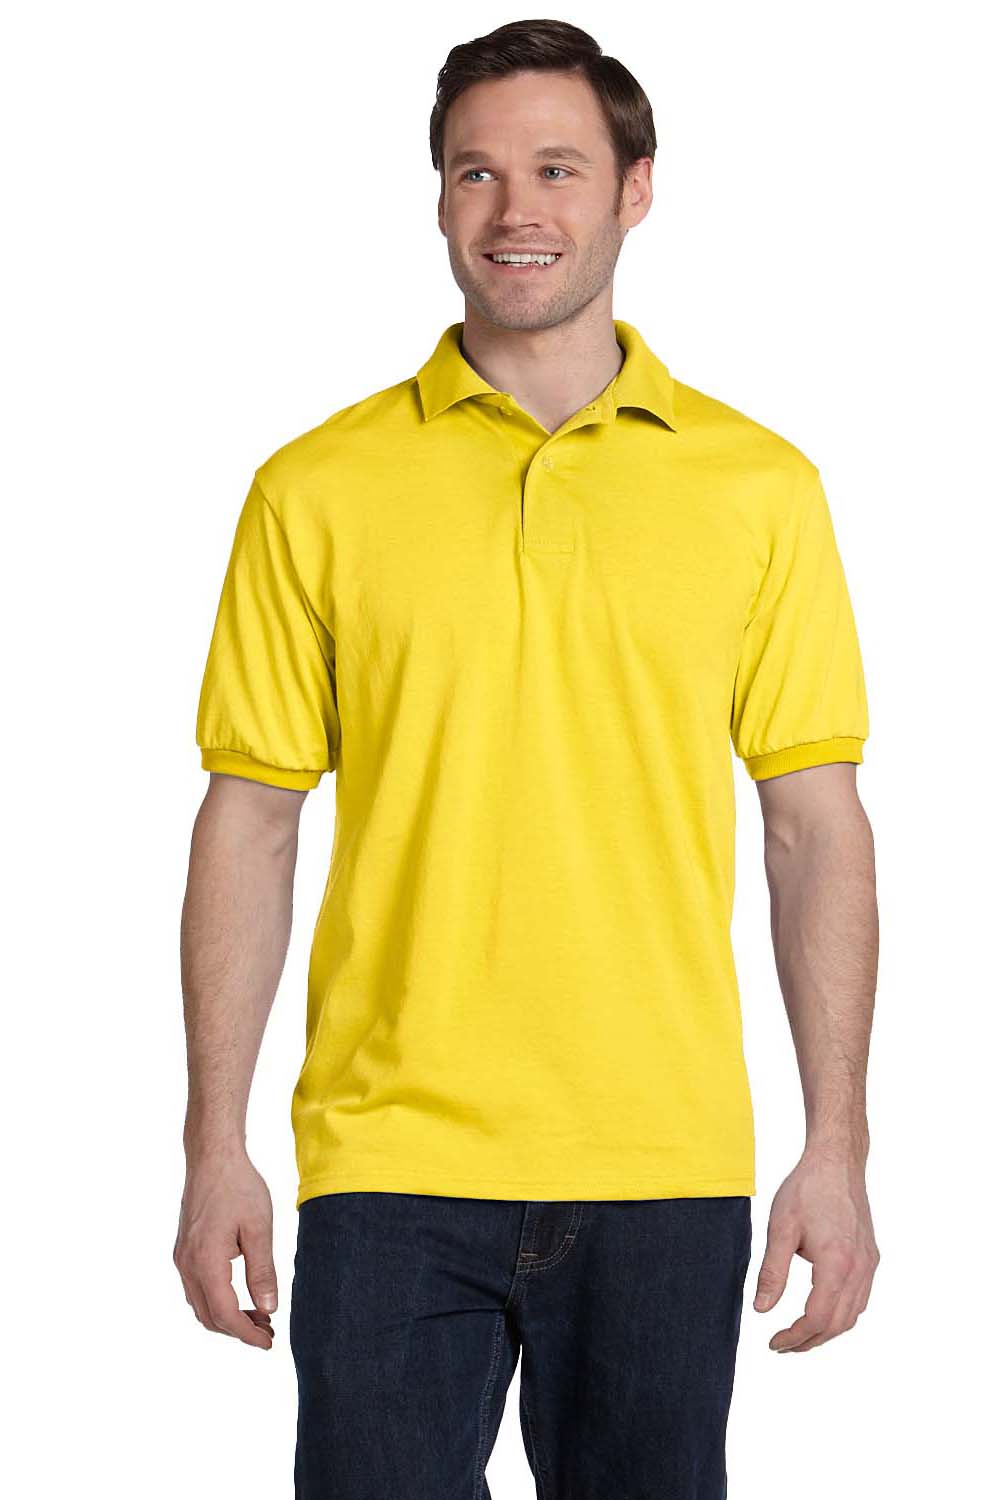 Hanes 054 Mens EcoSmart Short Sleeve Polo Shirt Yellow Front